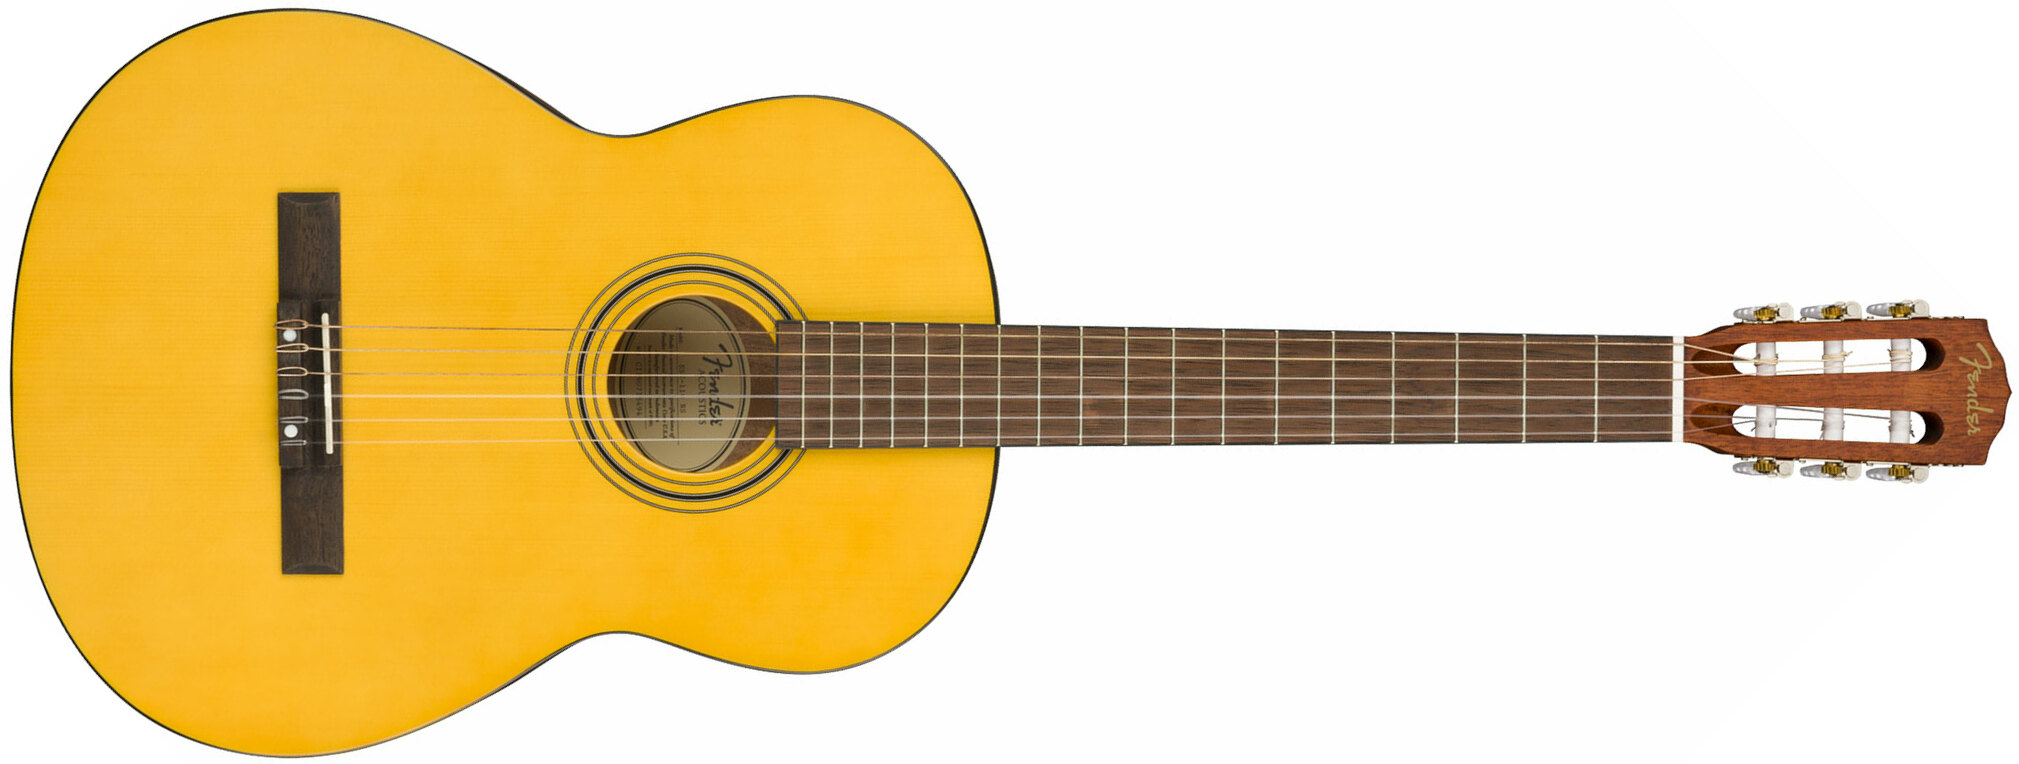 Fender Esc-110 Wide Neck Educational 4/4 Epicea Okoume Noy - Vintage Natural - Classical guitar 4/4 size - Main picture